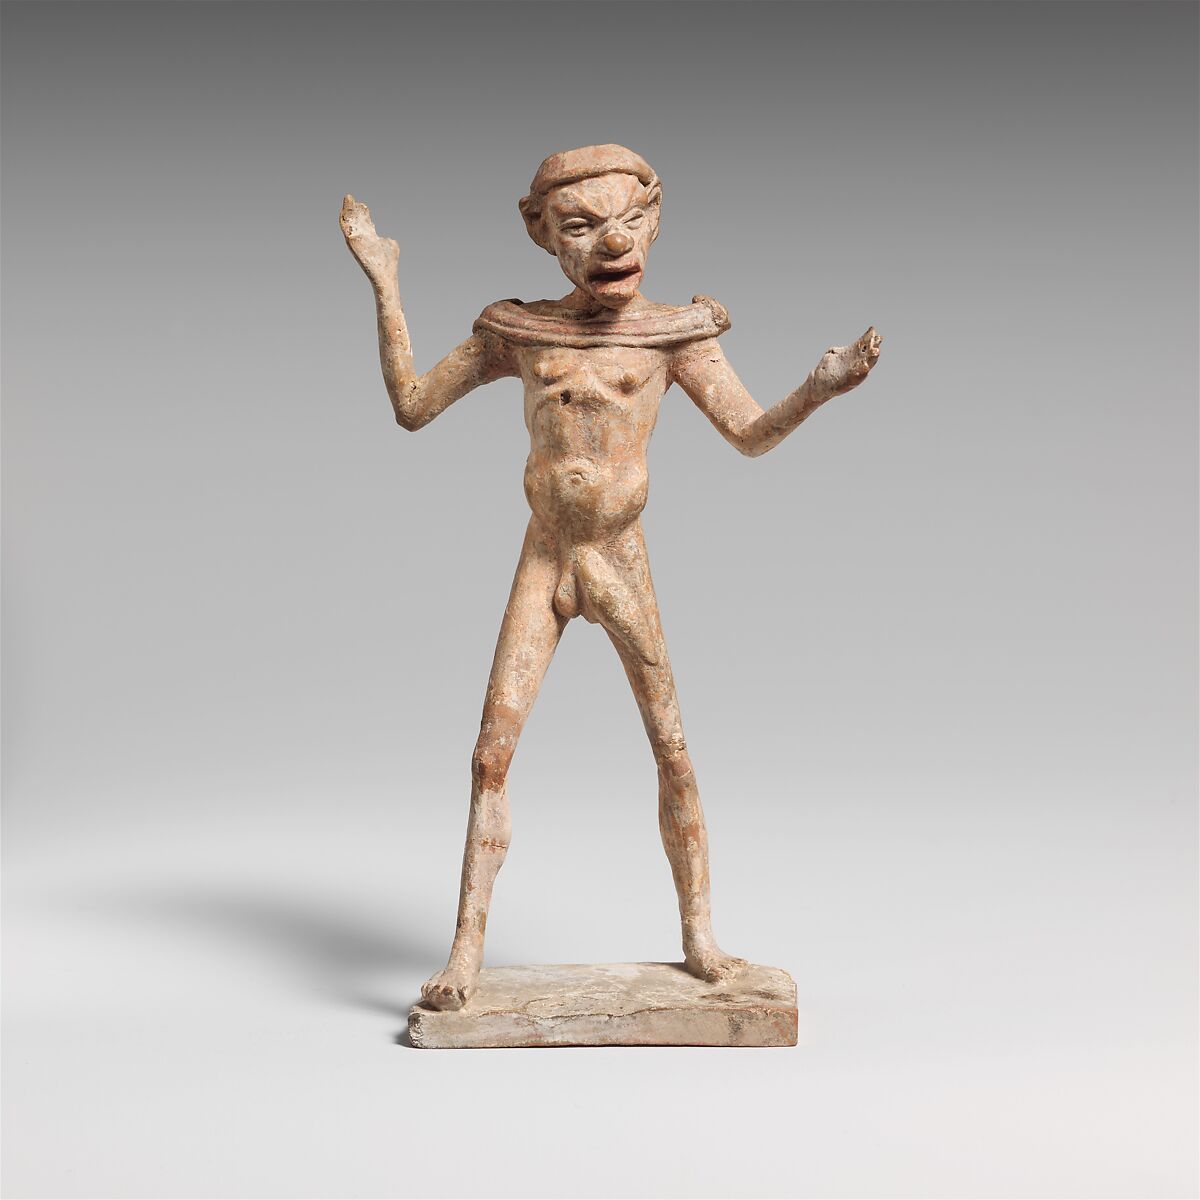 Terracotta statuette of a man, Terracotta, Greek, probably Asia Minor 